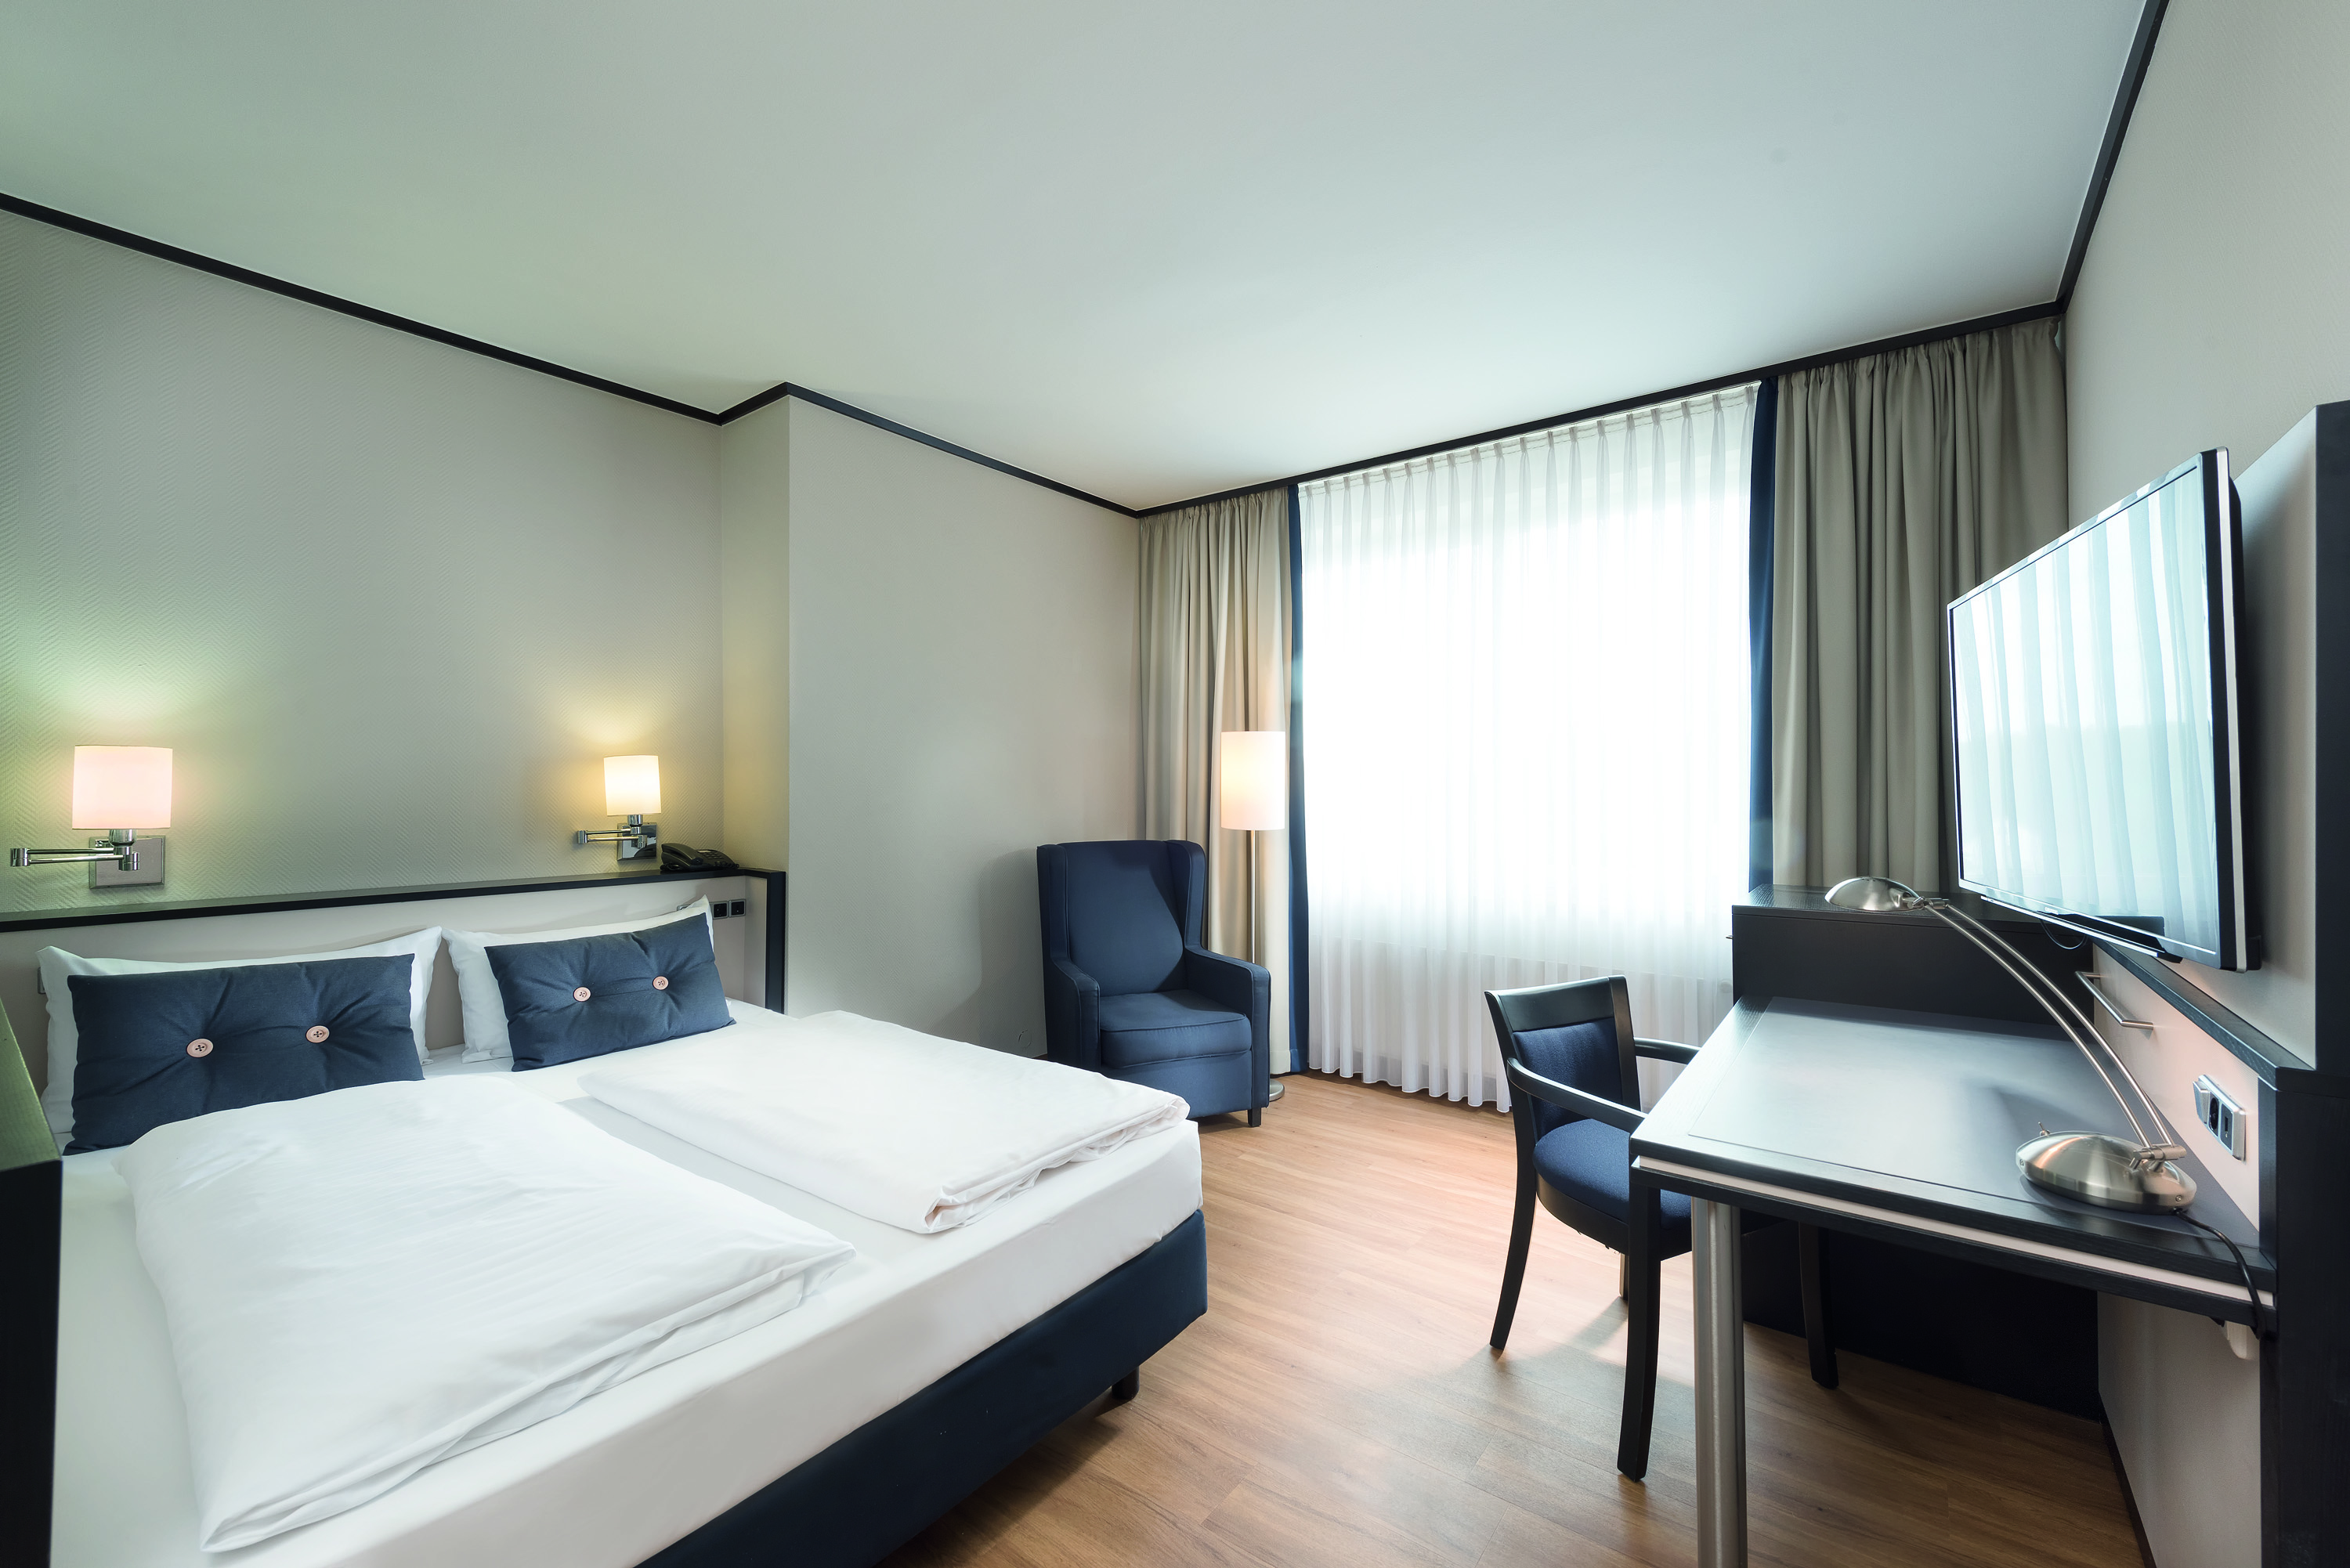 Seminaris Hotel Bad Honnef <br/>59.00 ew <br/> <a href='http://vakantieoplossing.nl/outpage/?id=483c4d28deb4684c22ecbd652abd79d4' target='_blank'>View Details</a>